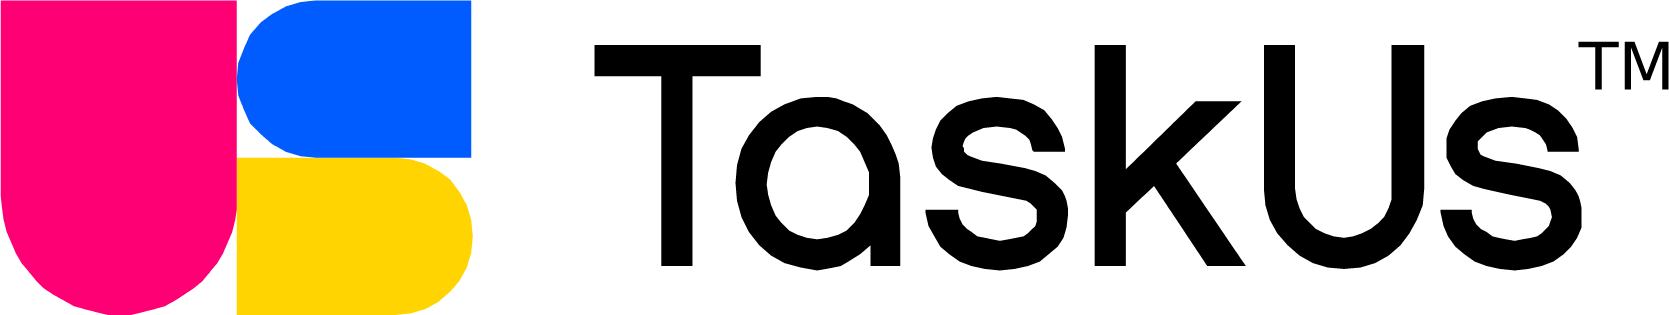 TaskUs logo large (transparent PNG)